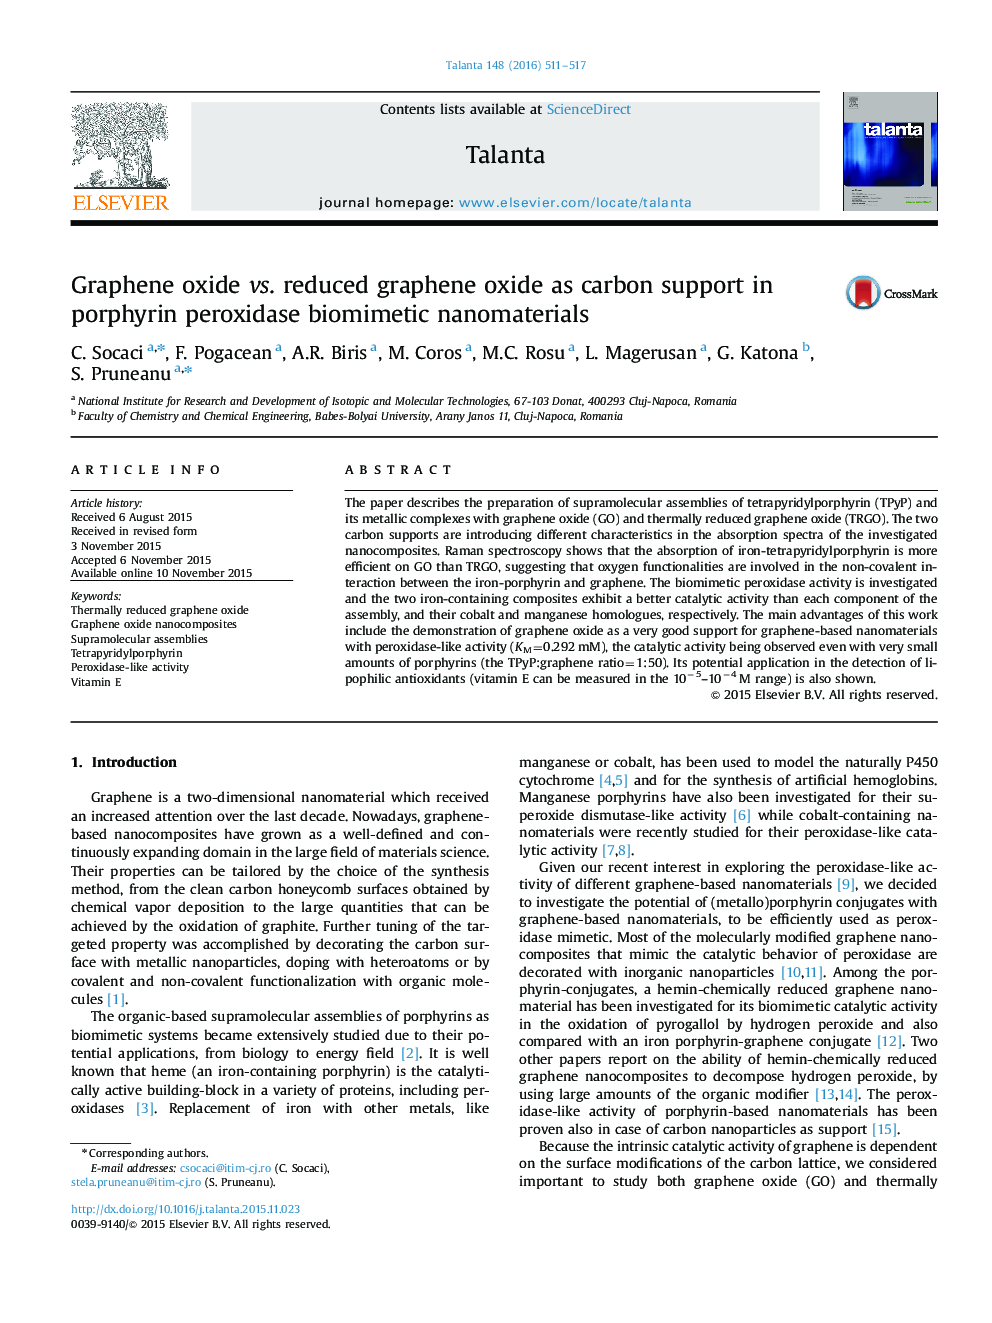 Graphene oxide vs. reduced graphene oxide as carbon support in porphyrin peroxidase biomimetic nanomaterials